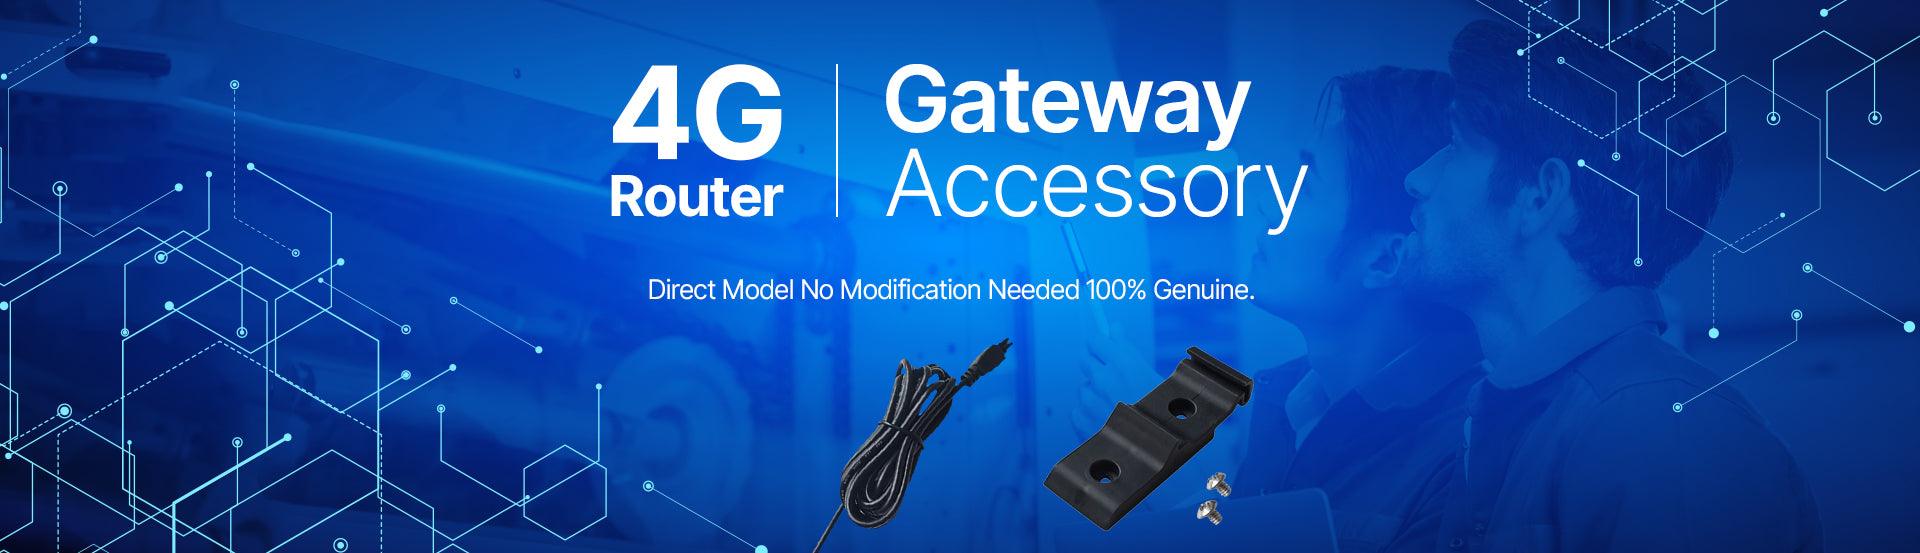 4G Router/Gateway Accessory - Riverplus